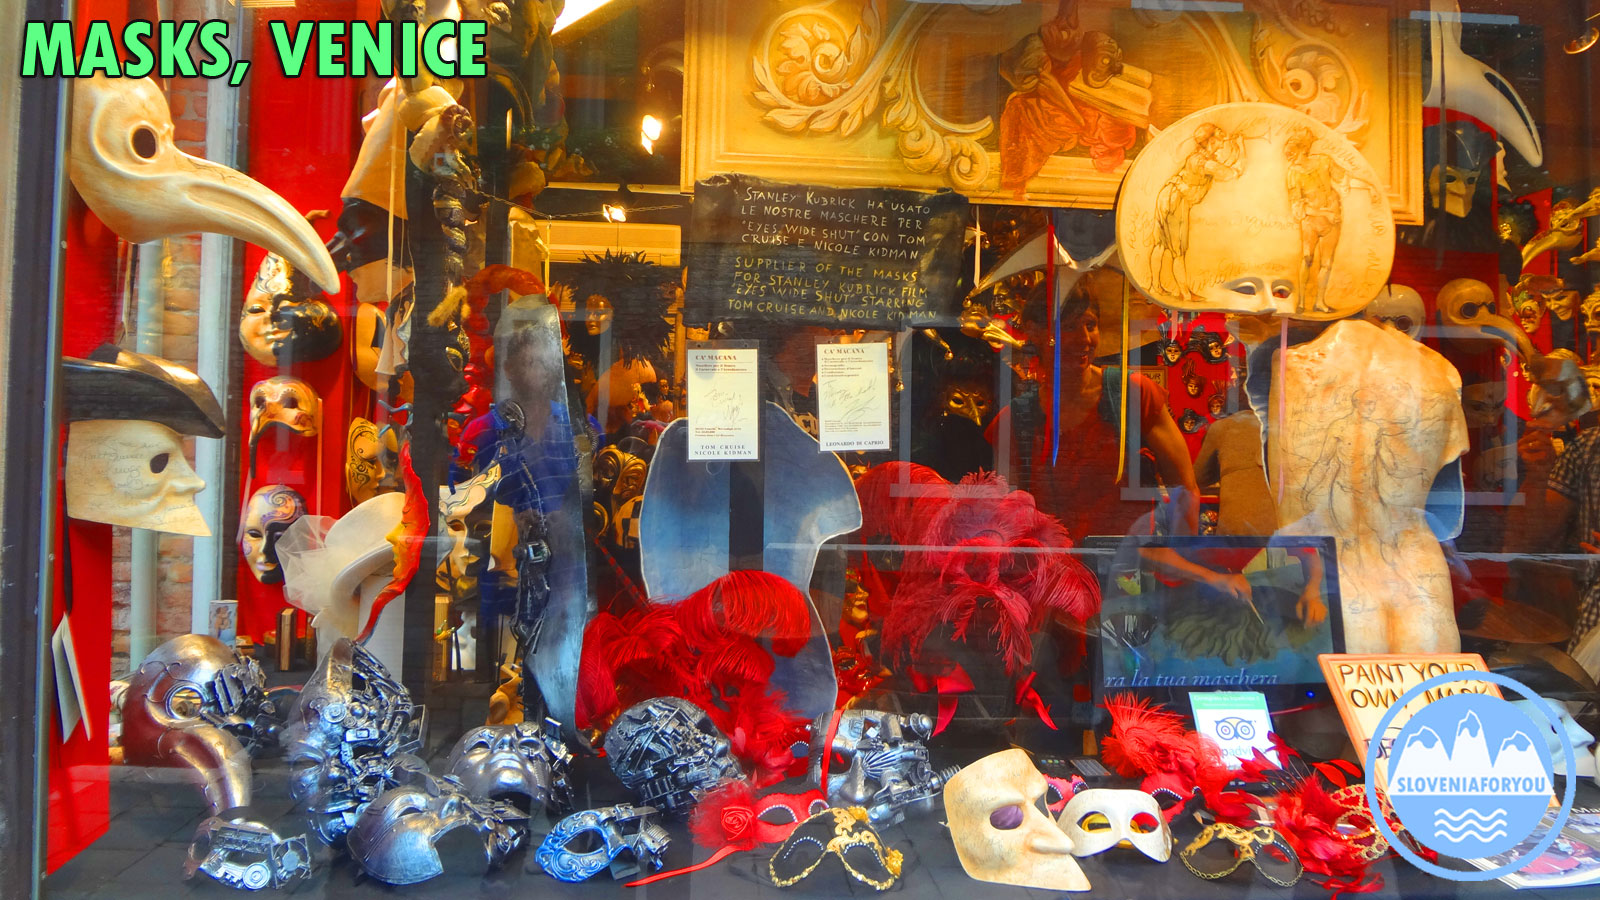 Carnevale Masks, Venice, Sloveniaforyou